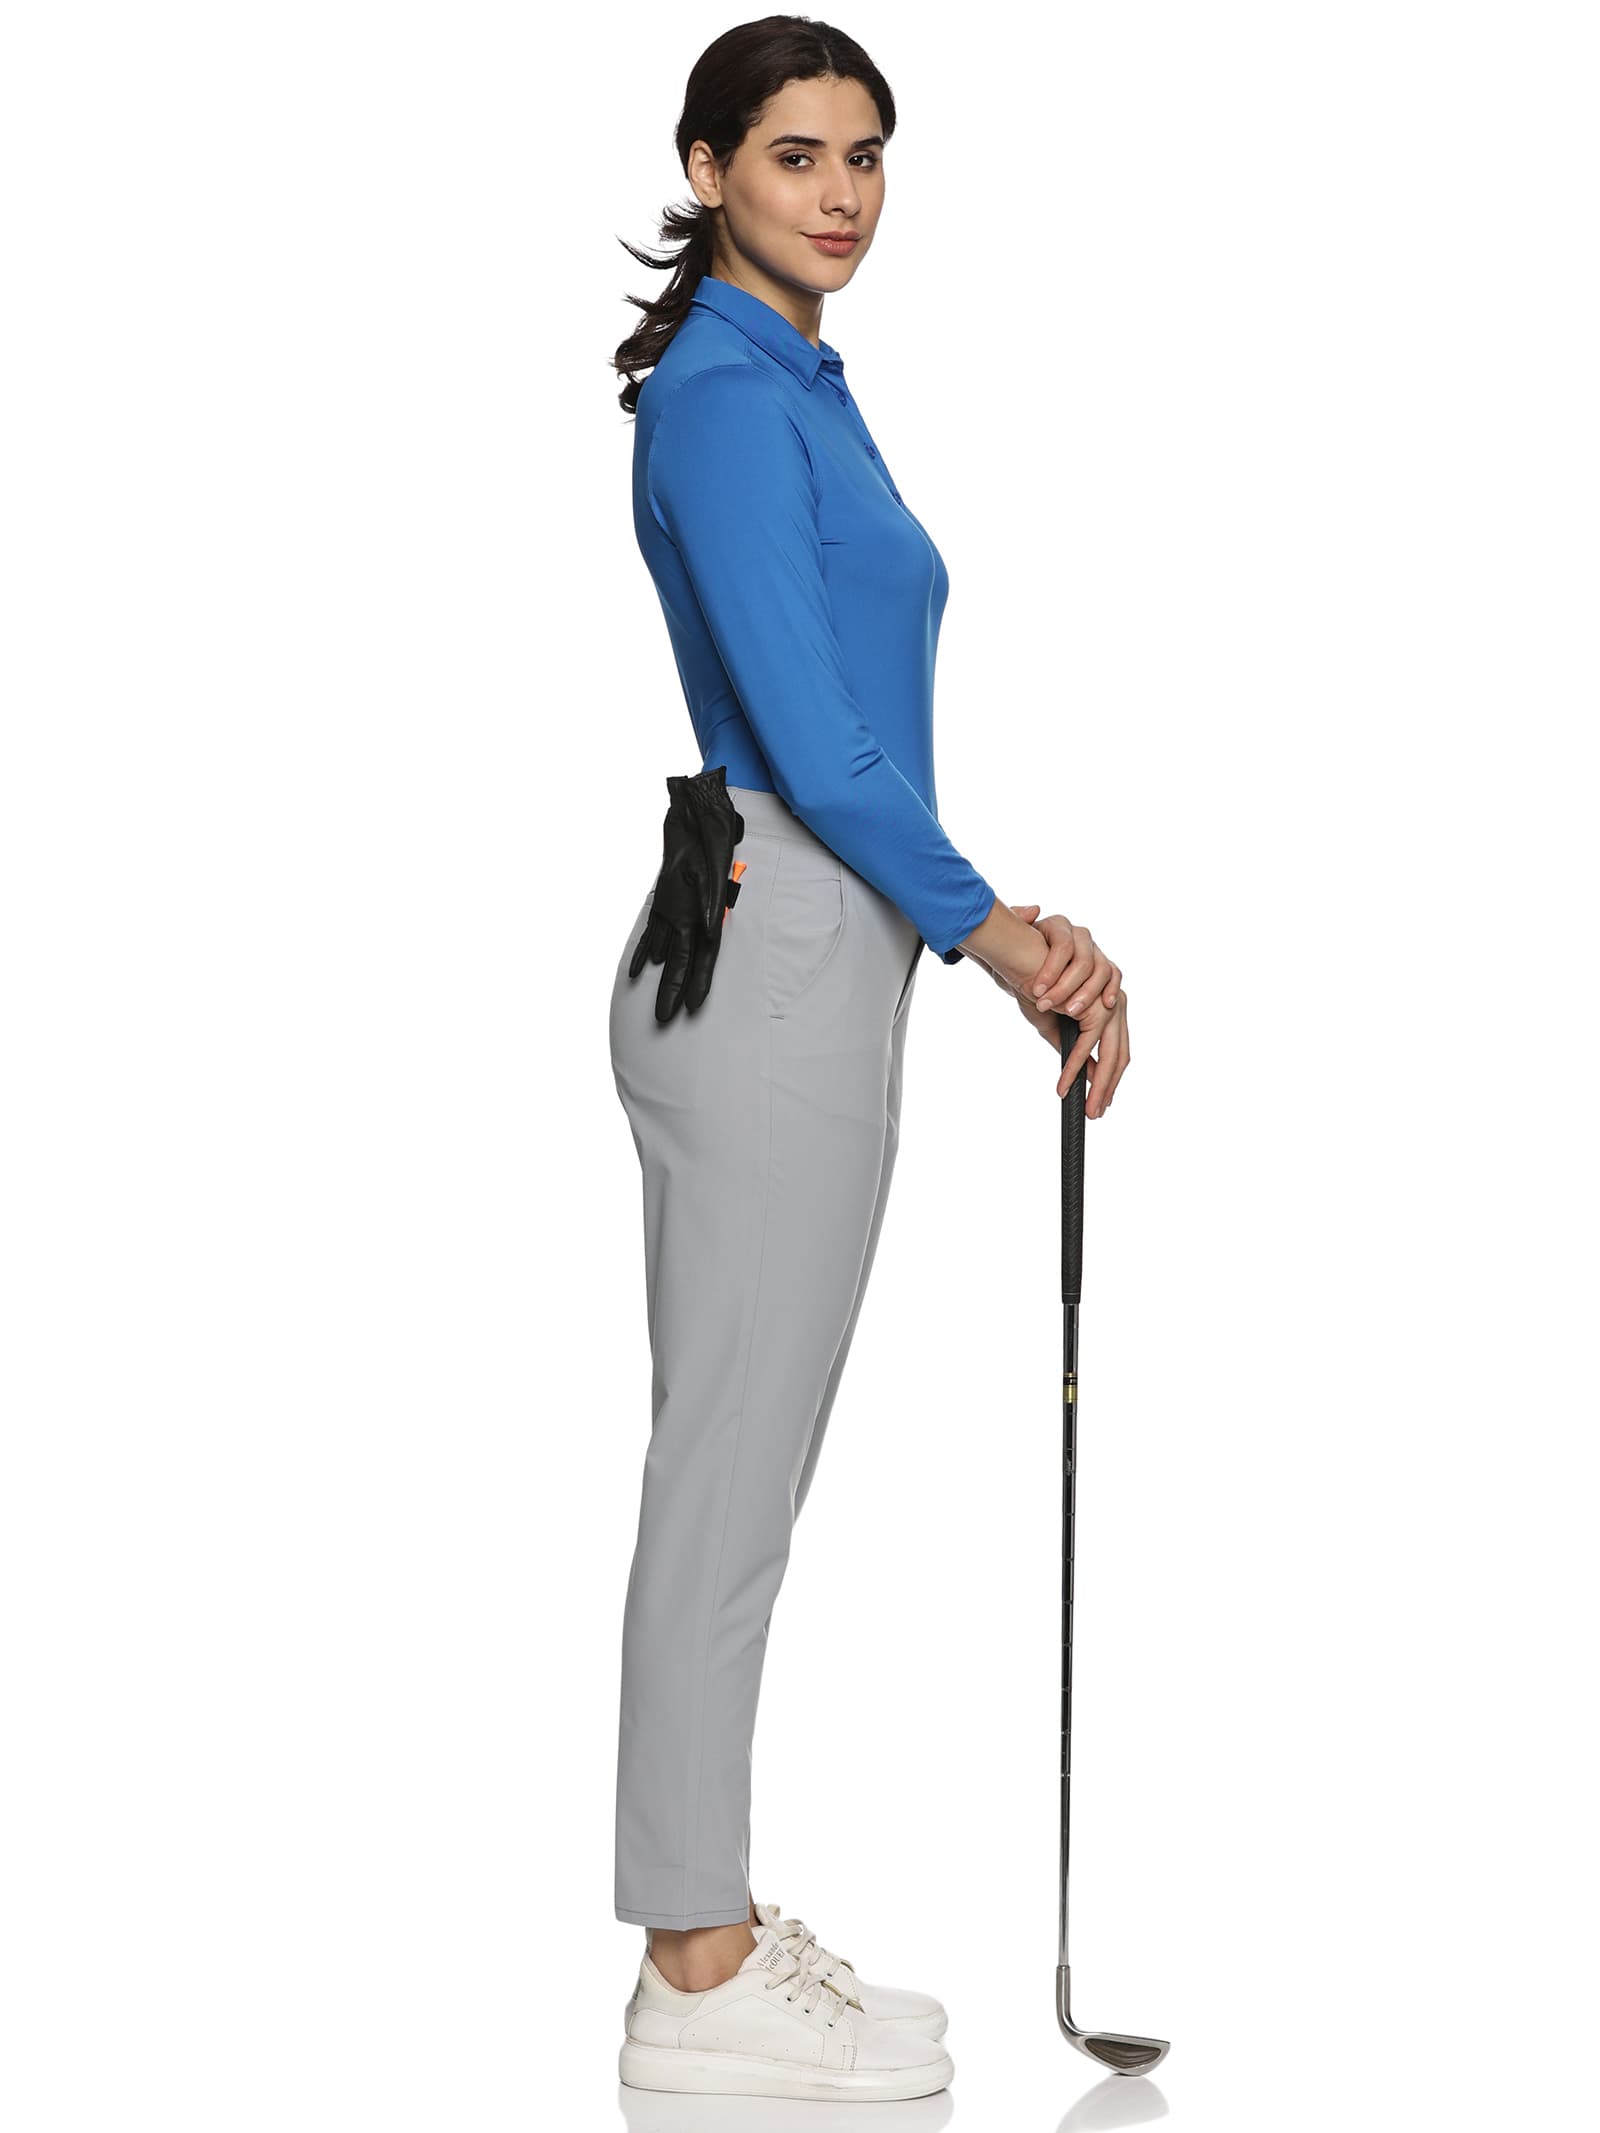 Styzen Women Golf Polo Full Sleeves T-shirt